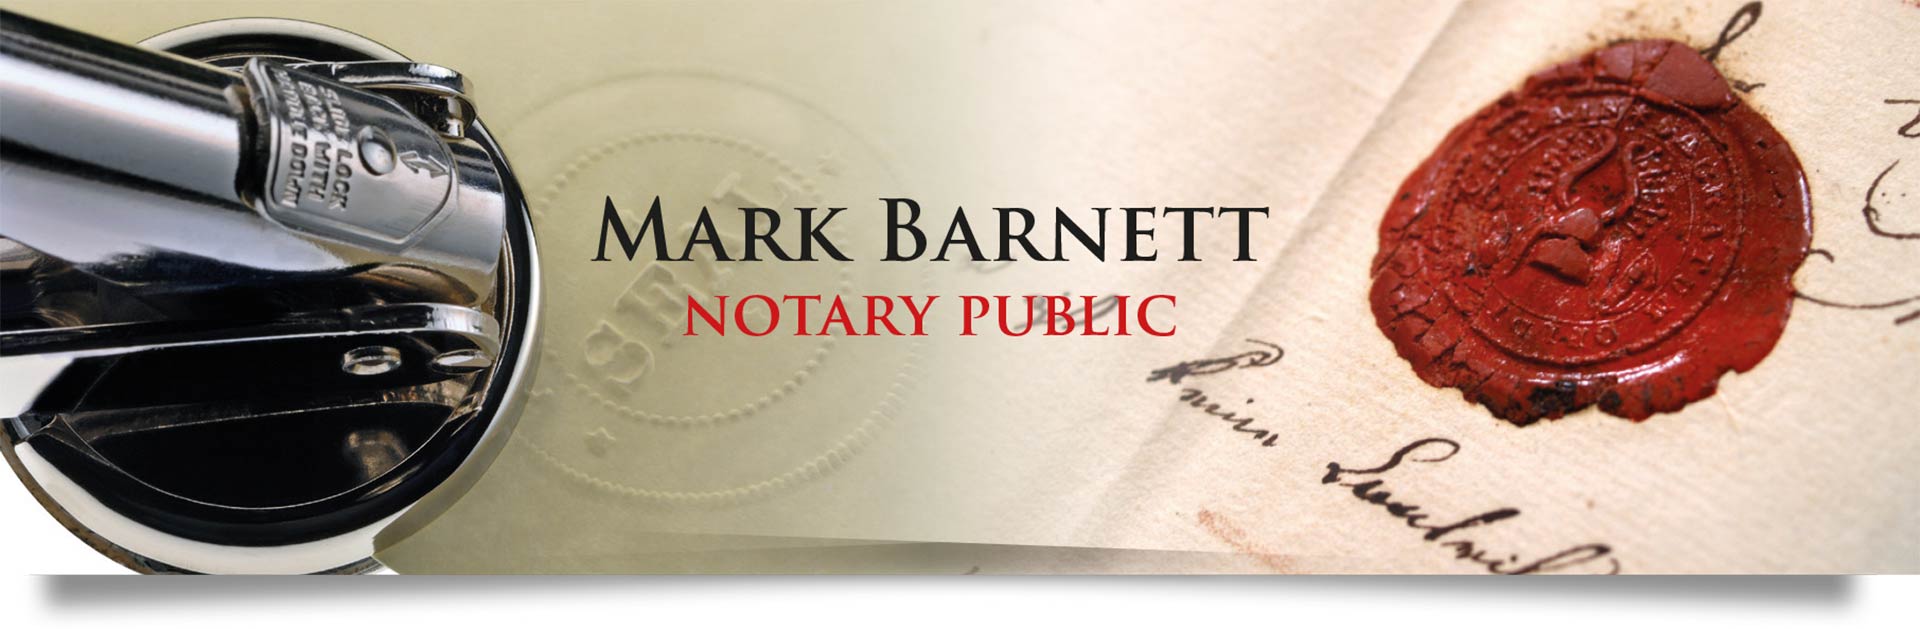 Notary Public Mayfair,Marylebone,Belgravia,Knightsbridge London